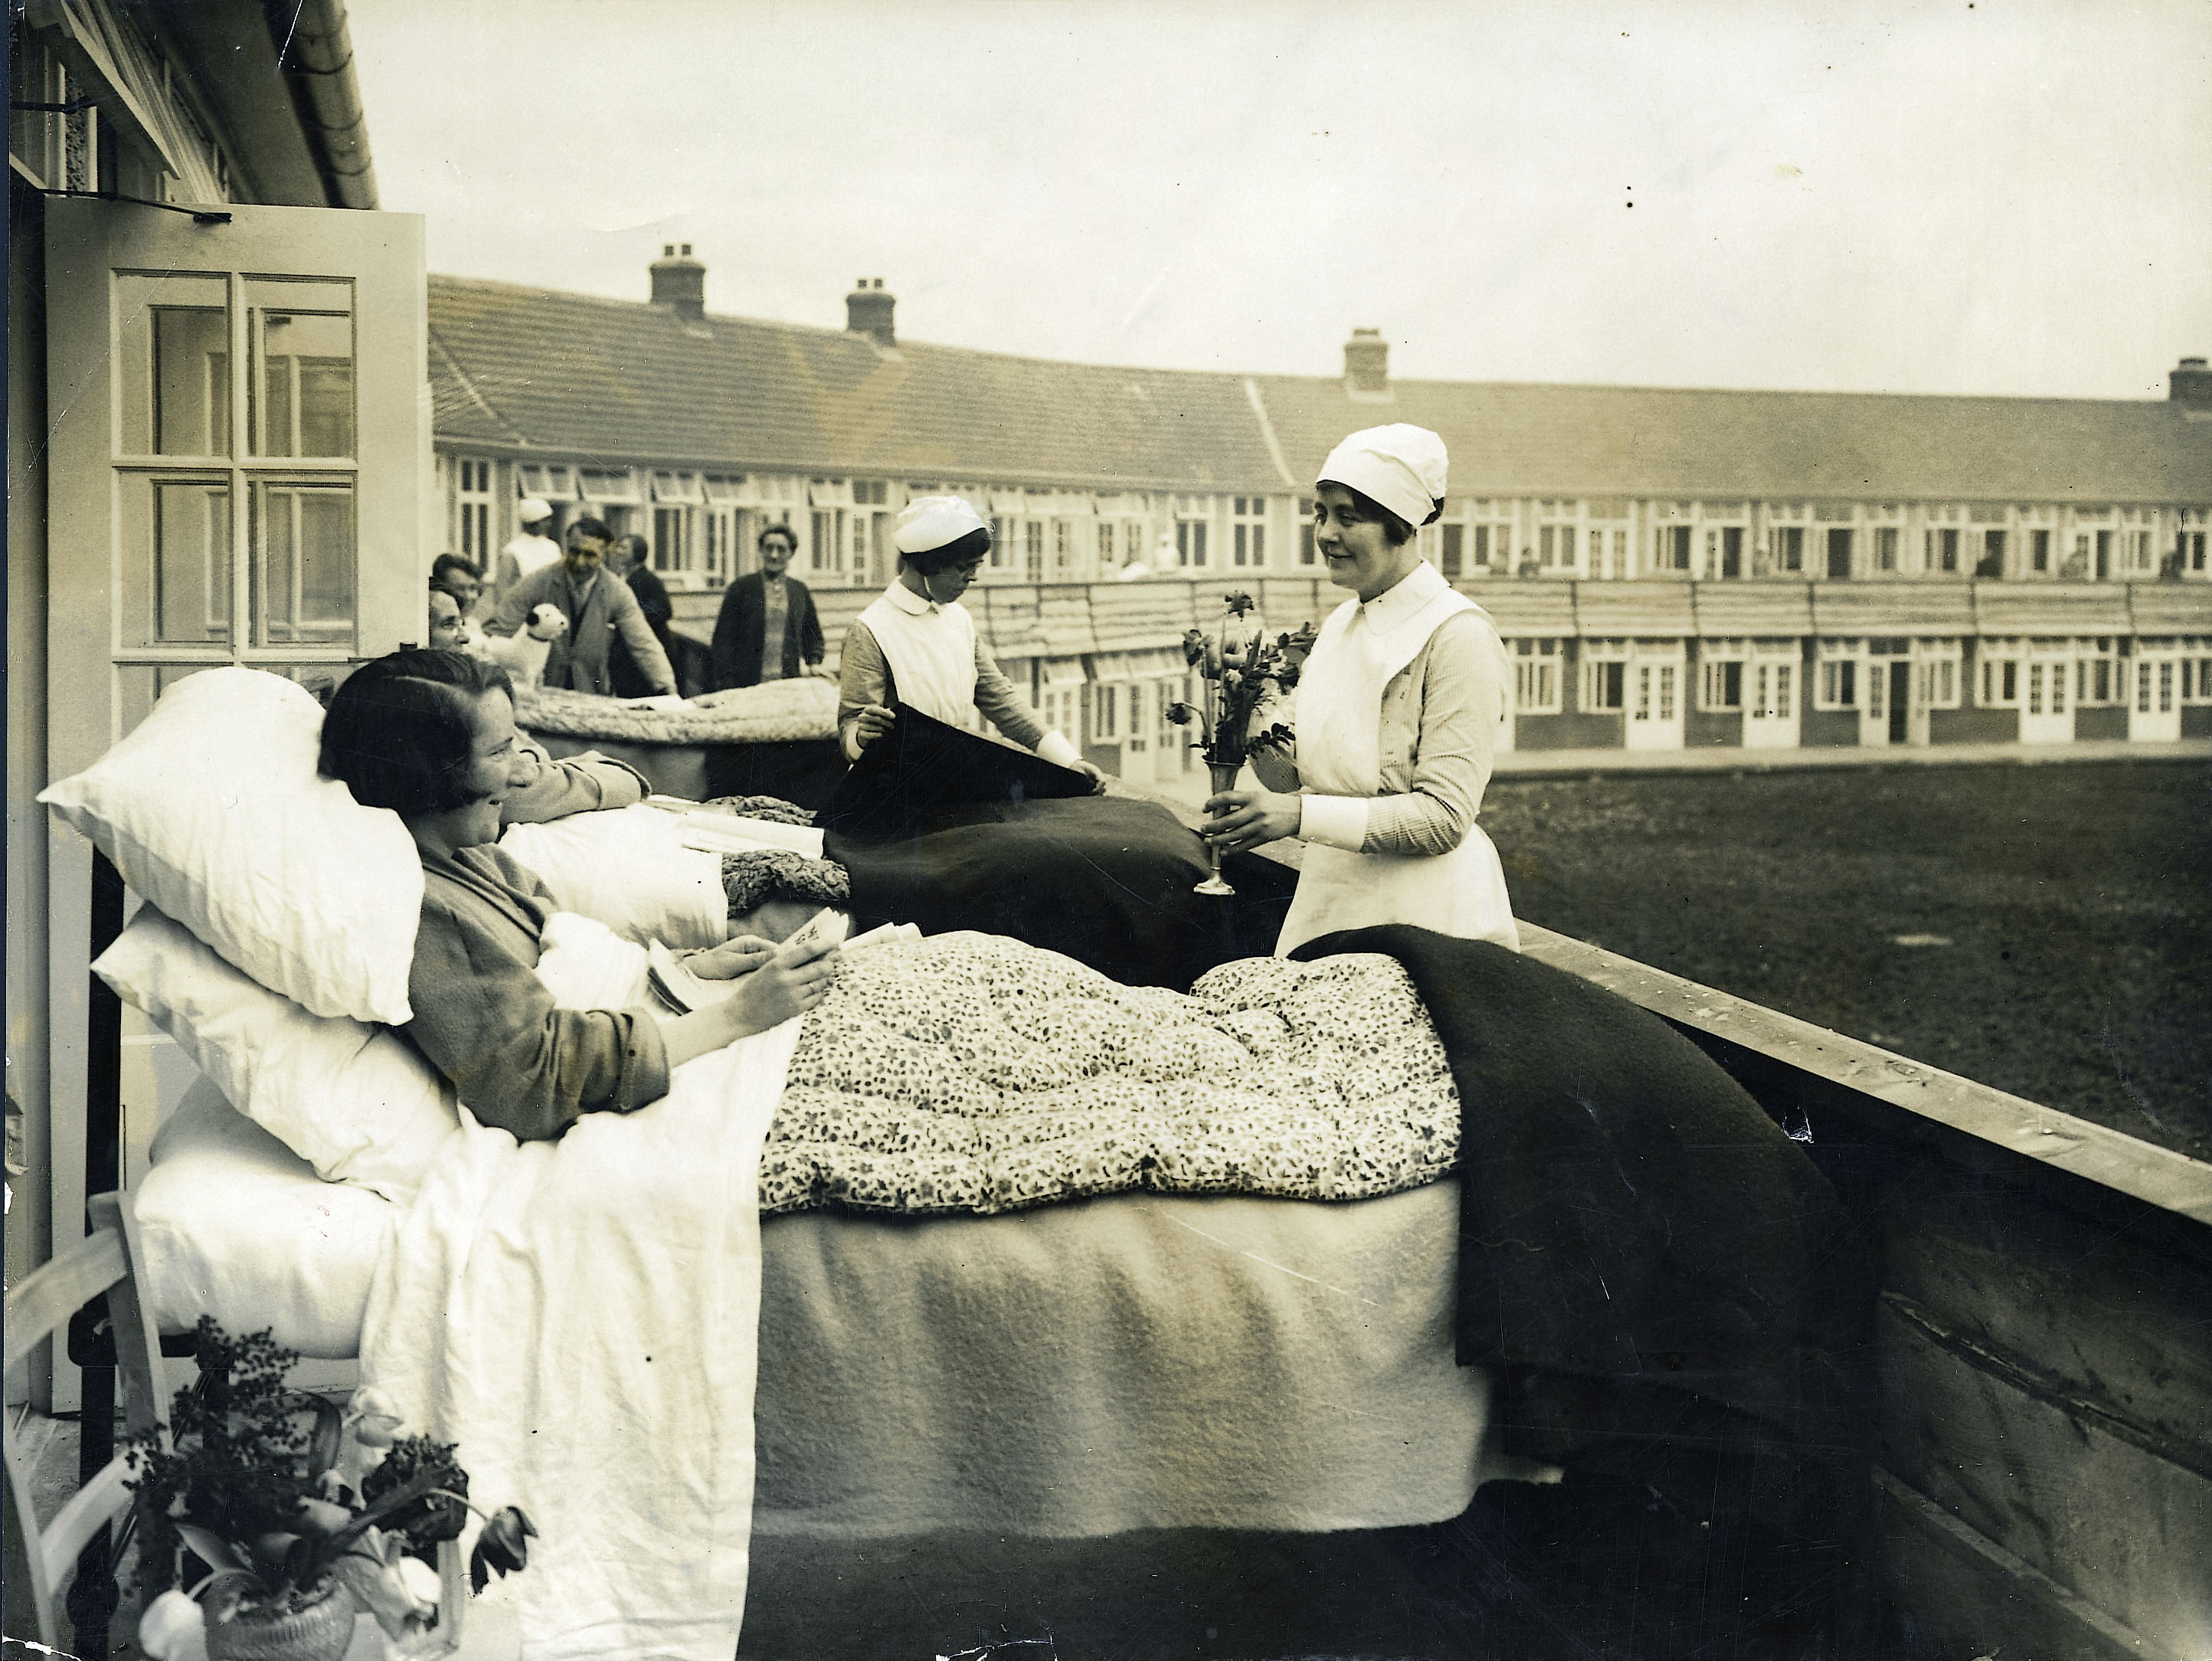 historic image of Papworth hospital